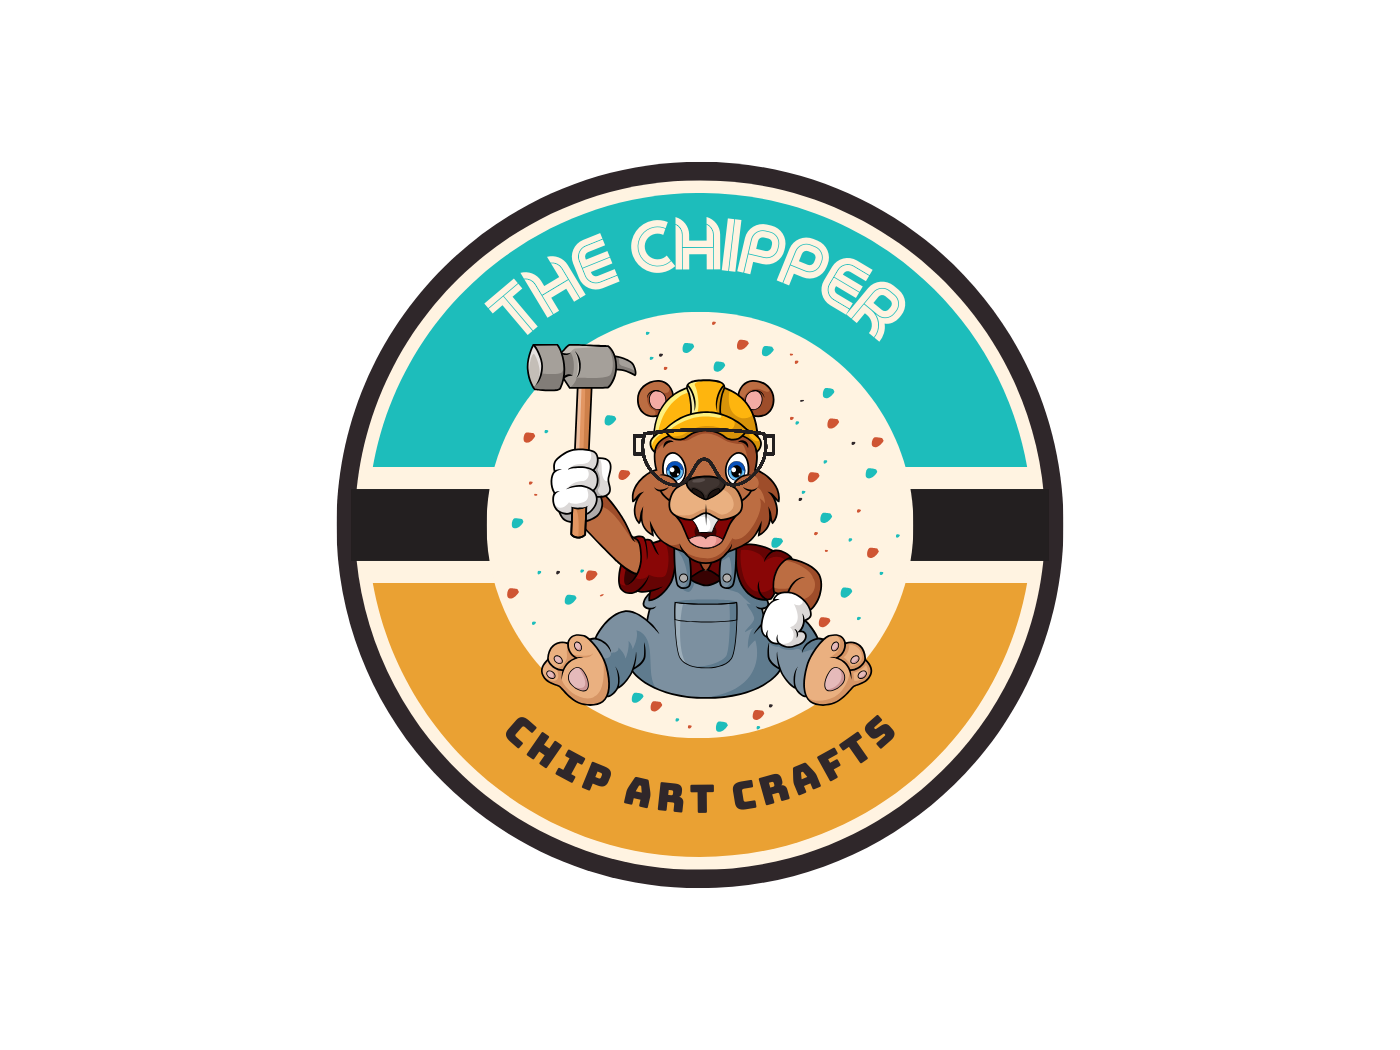 The Chipper stone crusher